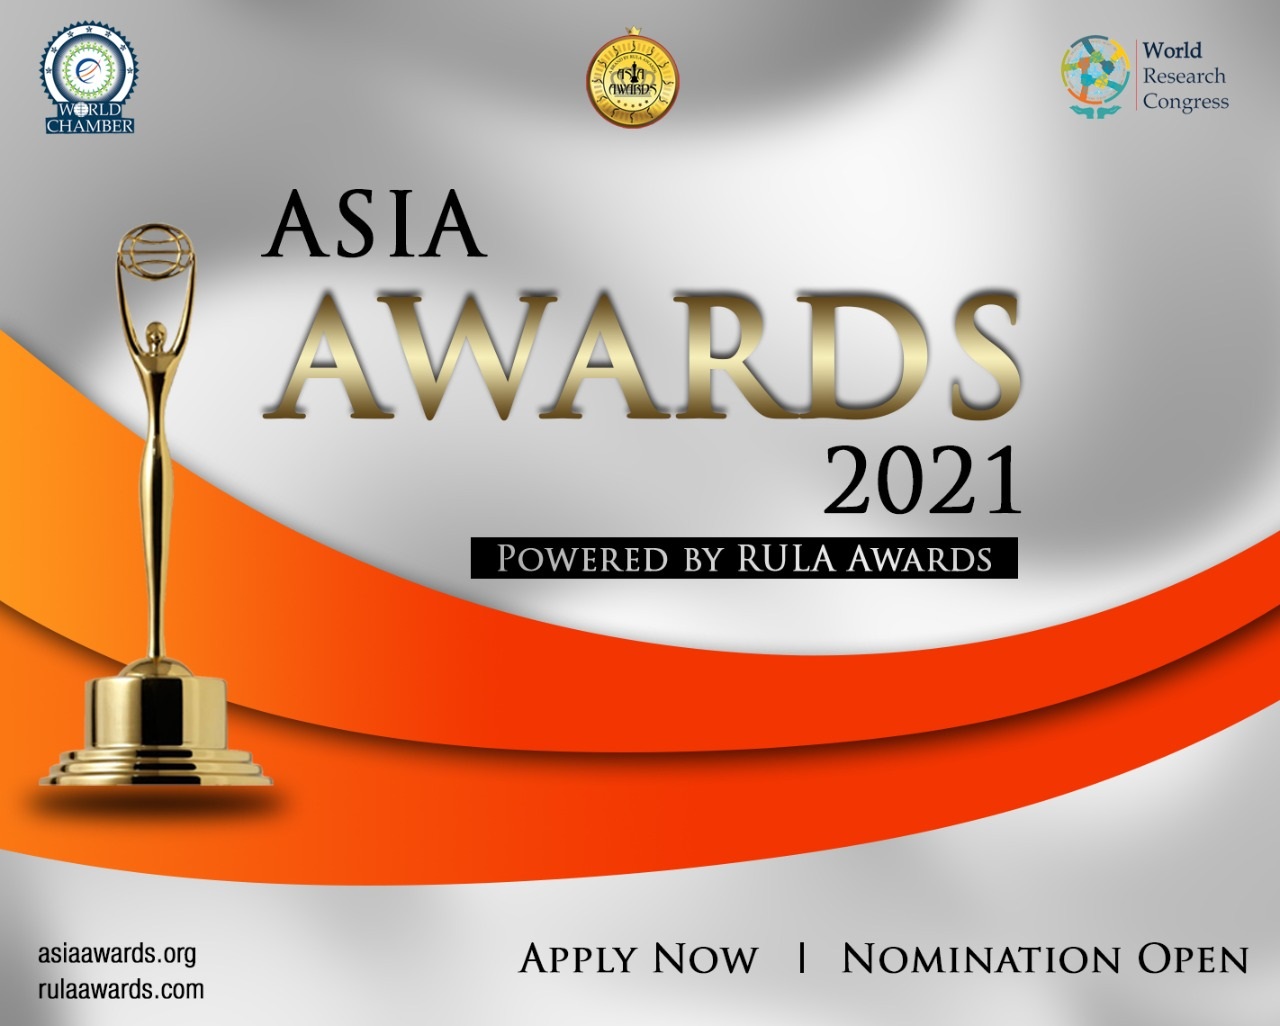 Shiran Peiris has bagged Asia's Chairman Award